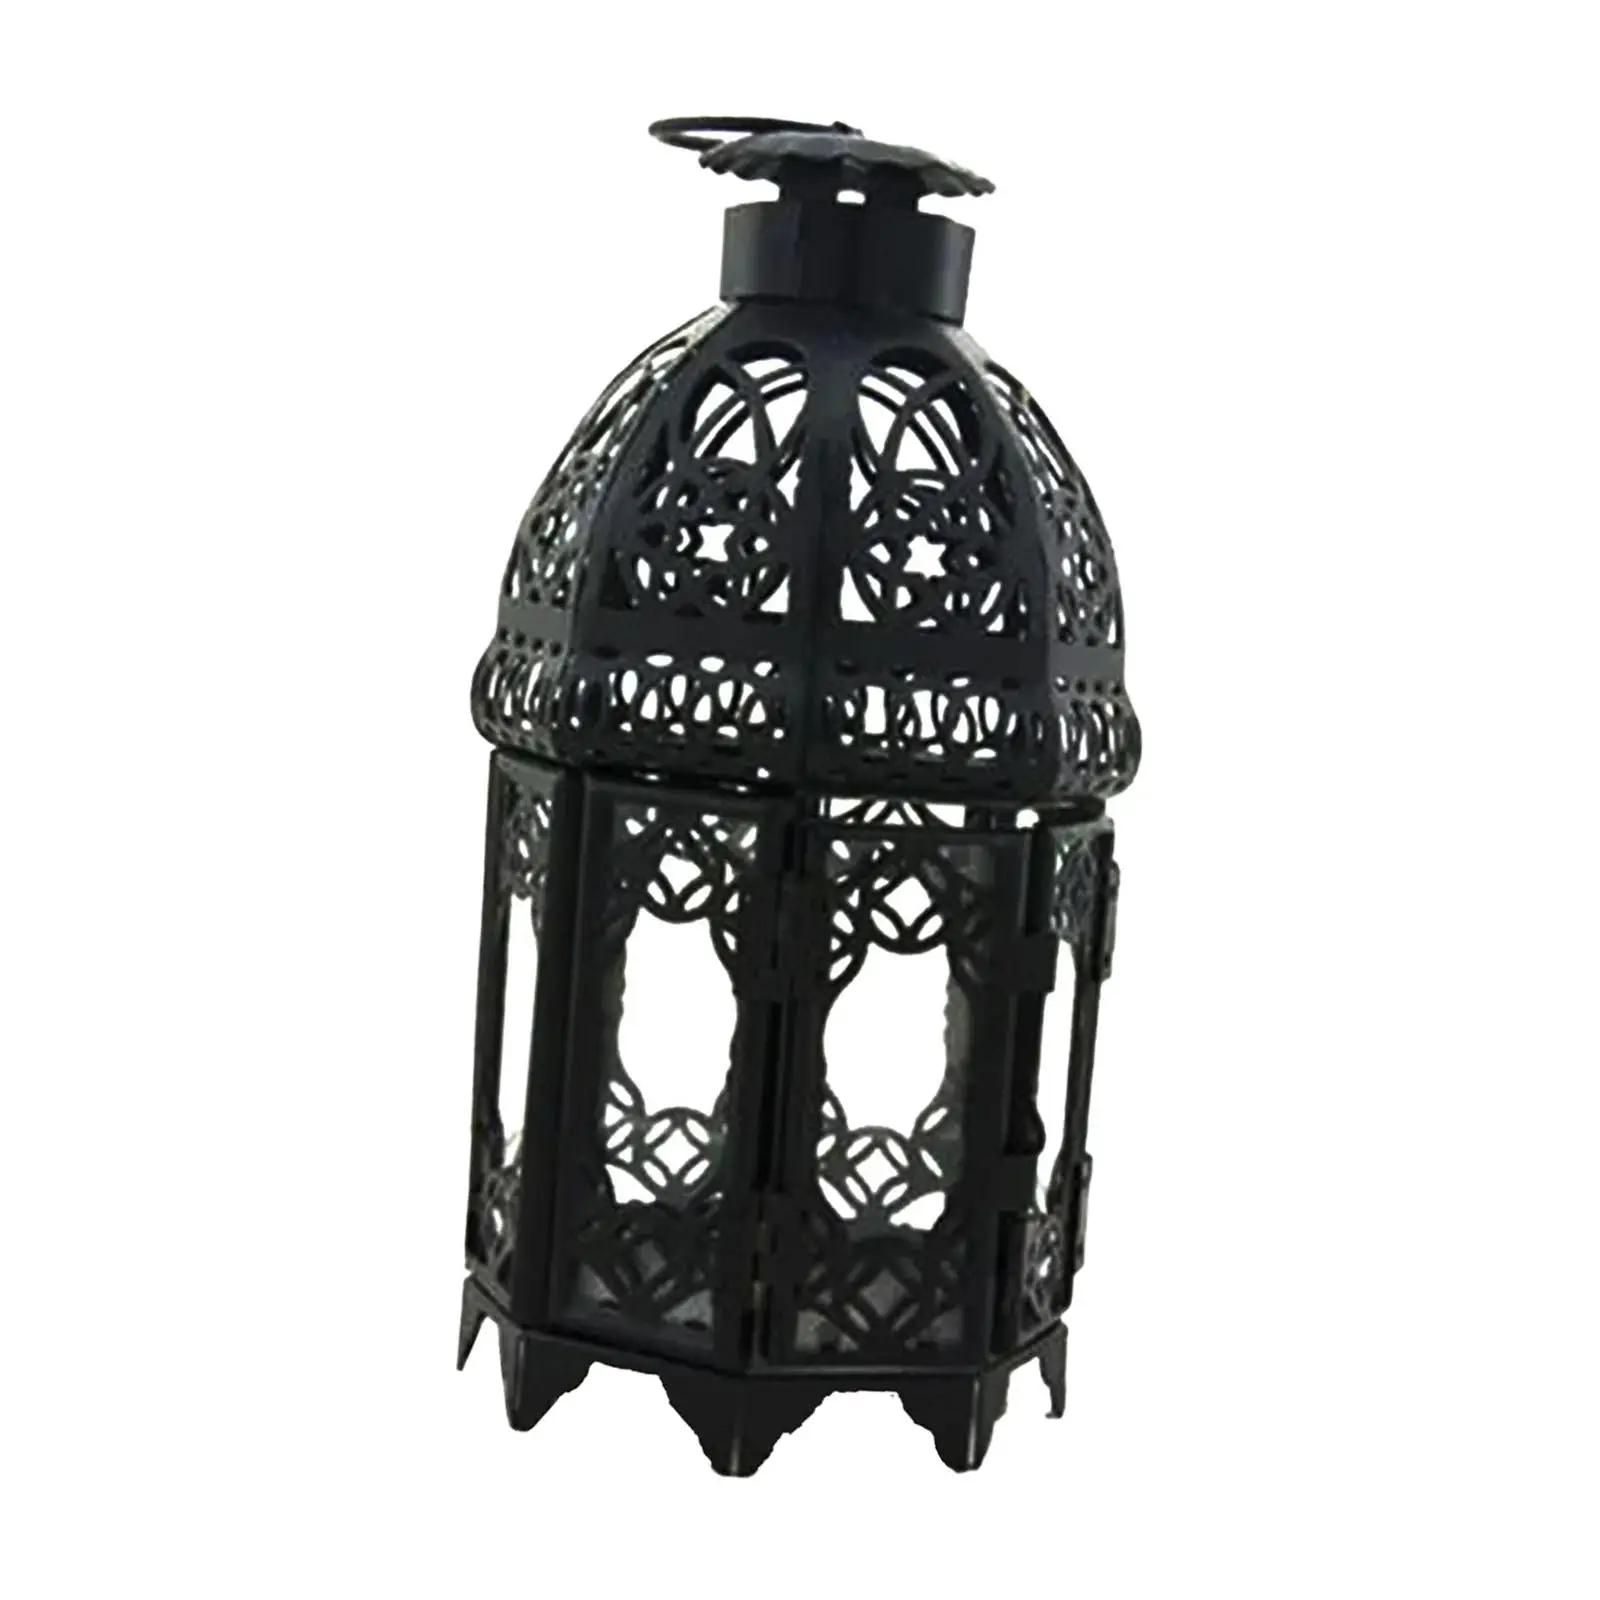 Decorative Candle Lantern Black Metal Hanging Decoration Hollow Candlestick for Tabletop Patio Livinig Room Farmhous